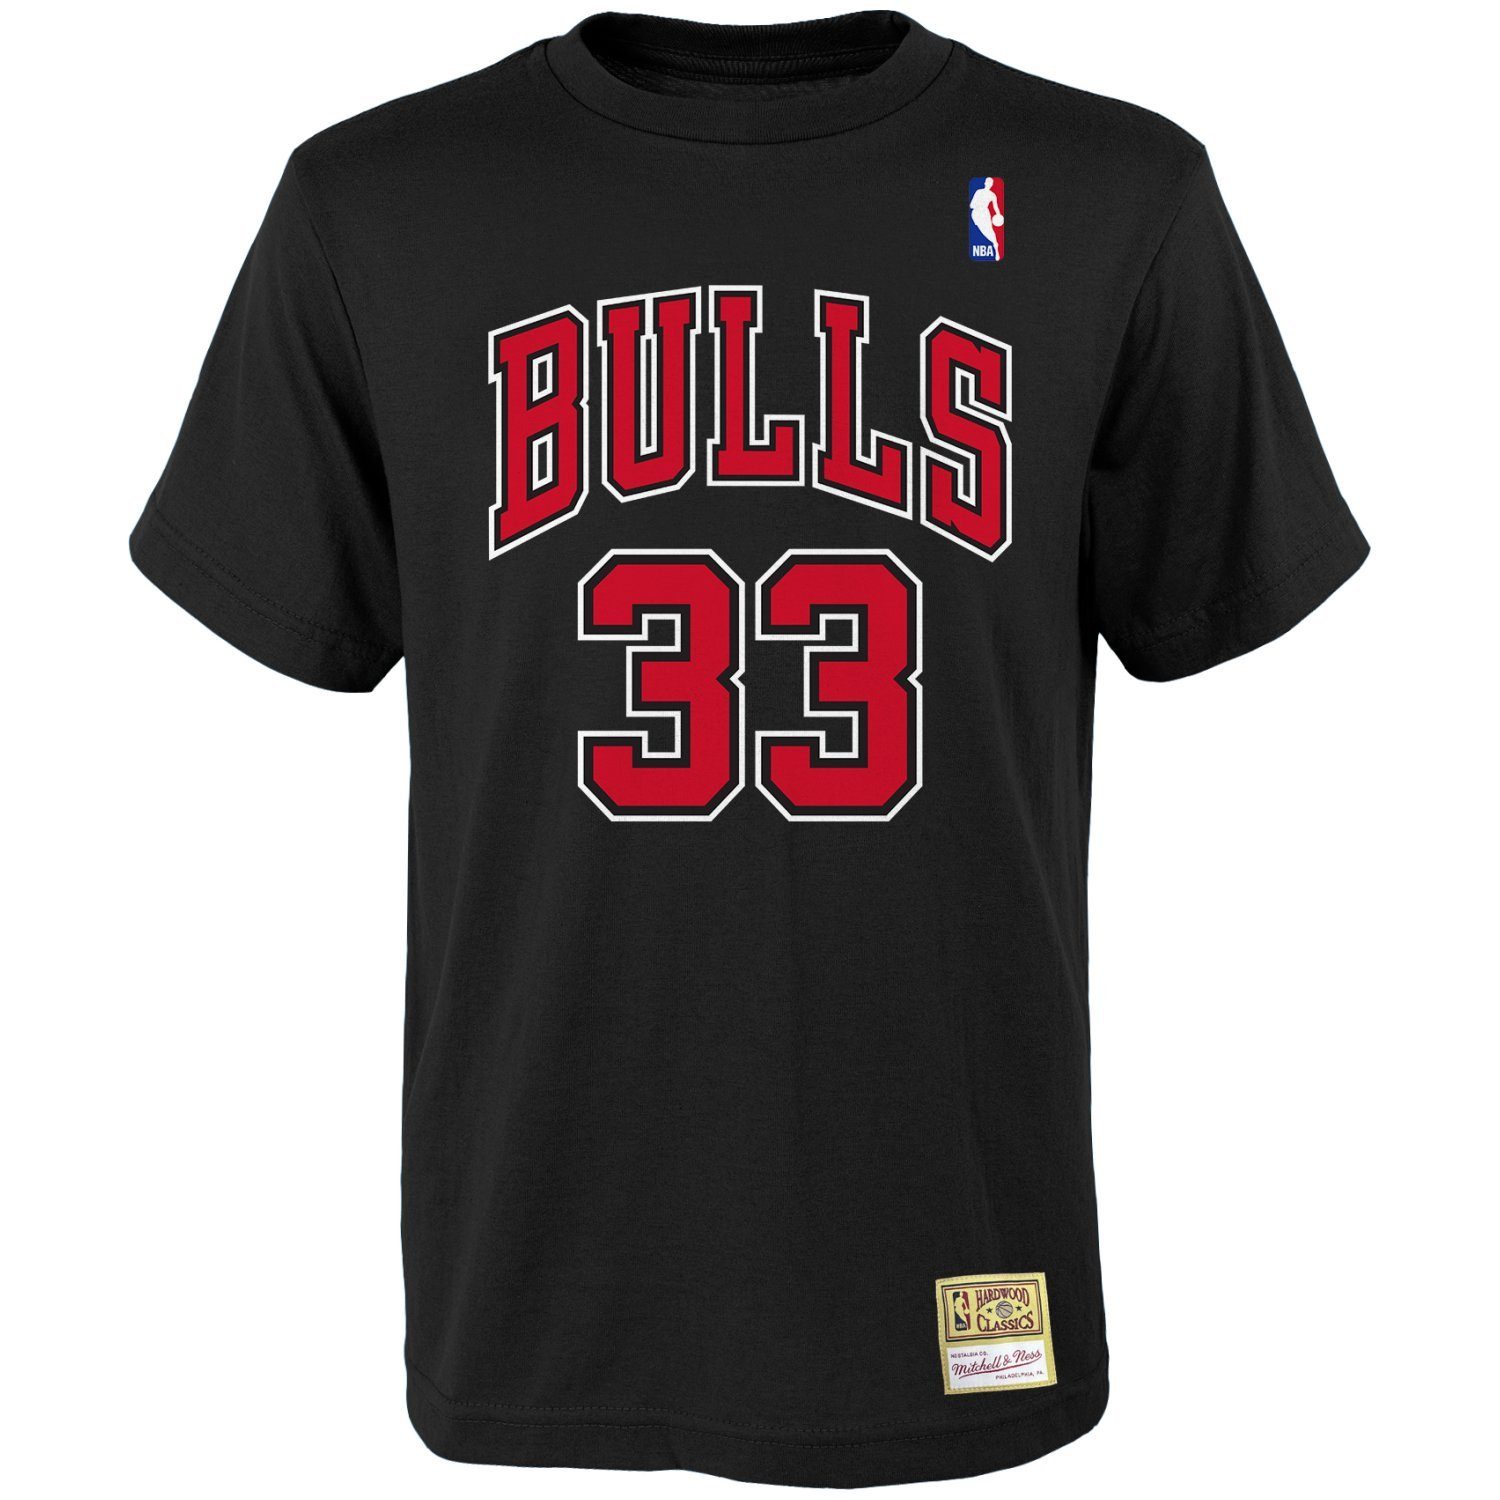 Black Scottie Red & Chicago Pippen Chicago Mitchell Ness Print-Shirt / Bulls / Bulls